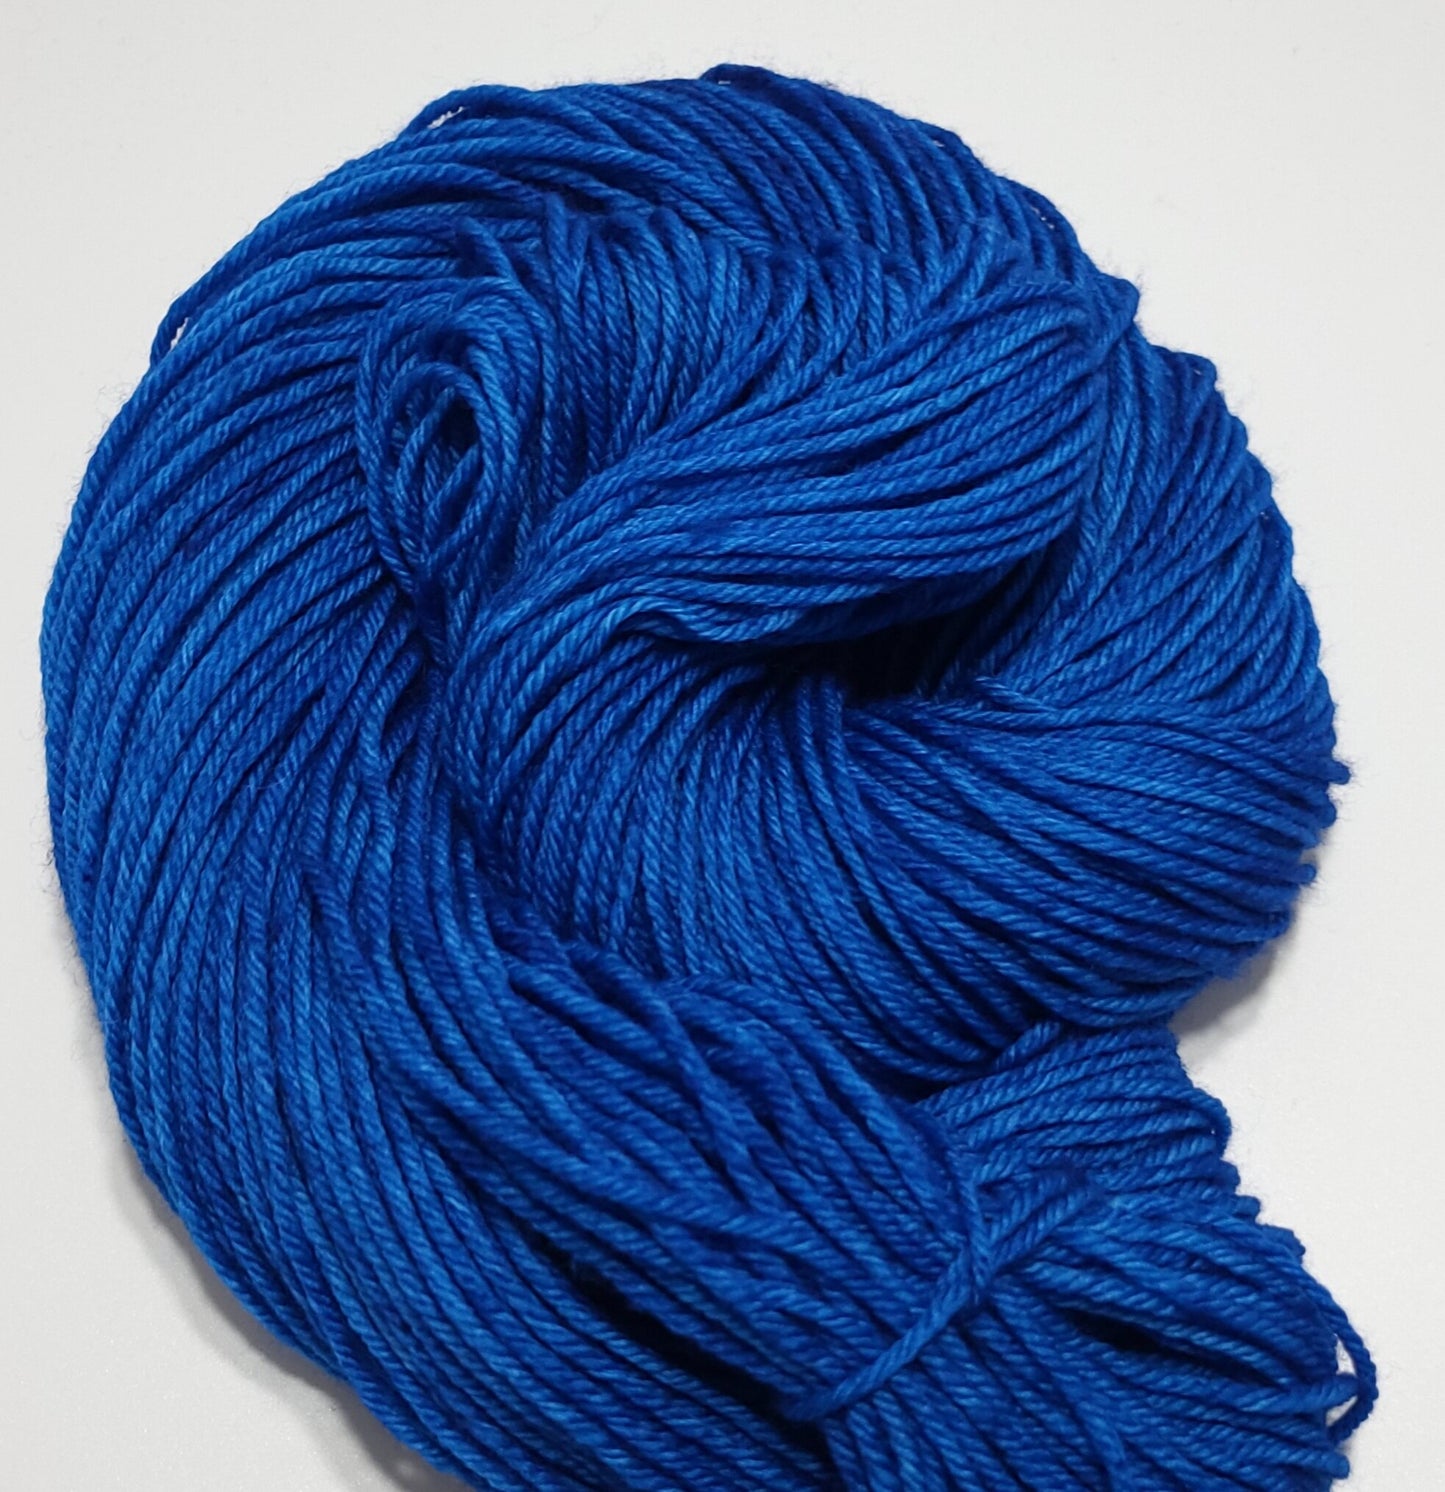 Pictsie Blue - 100% Merino